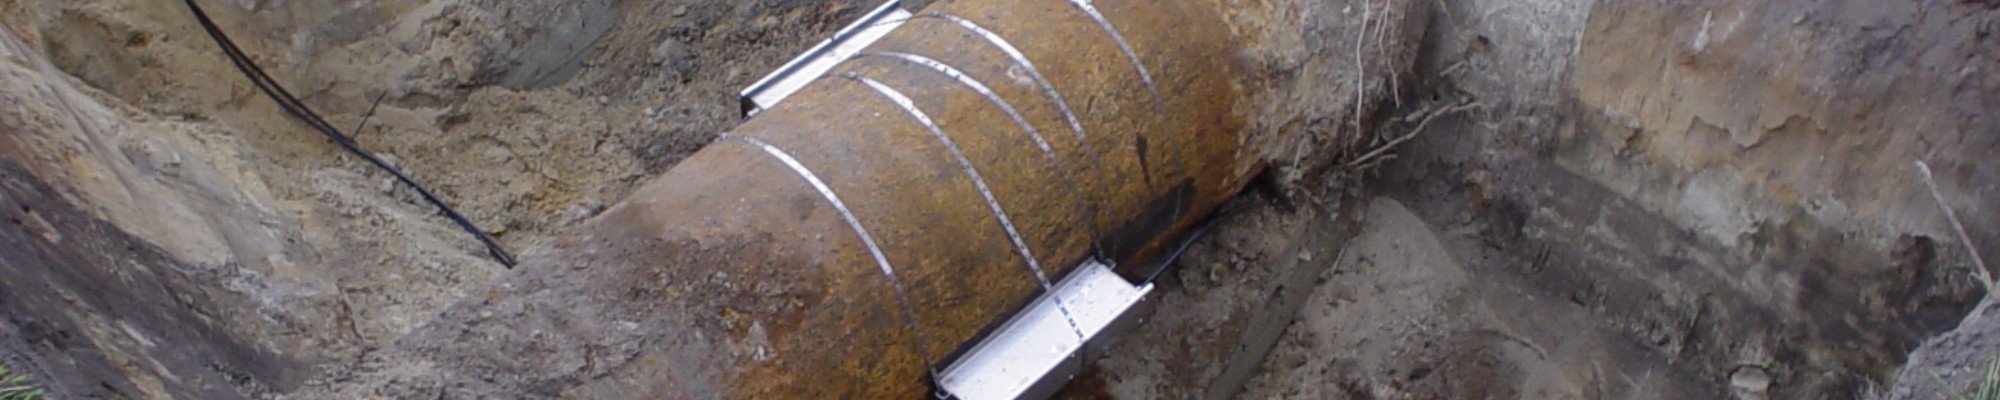 Permanente ondergrondse opstelling van een clamp-on ultrasoon flowmeter door ODS